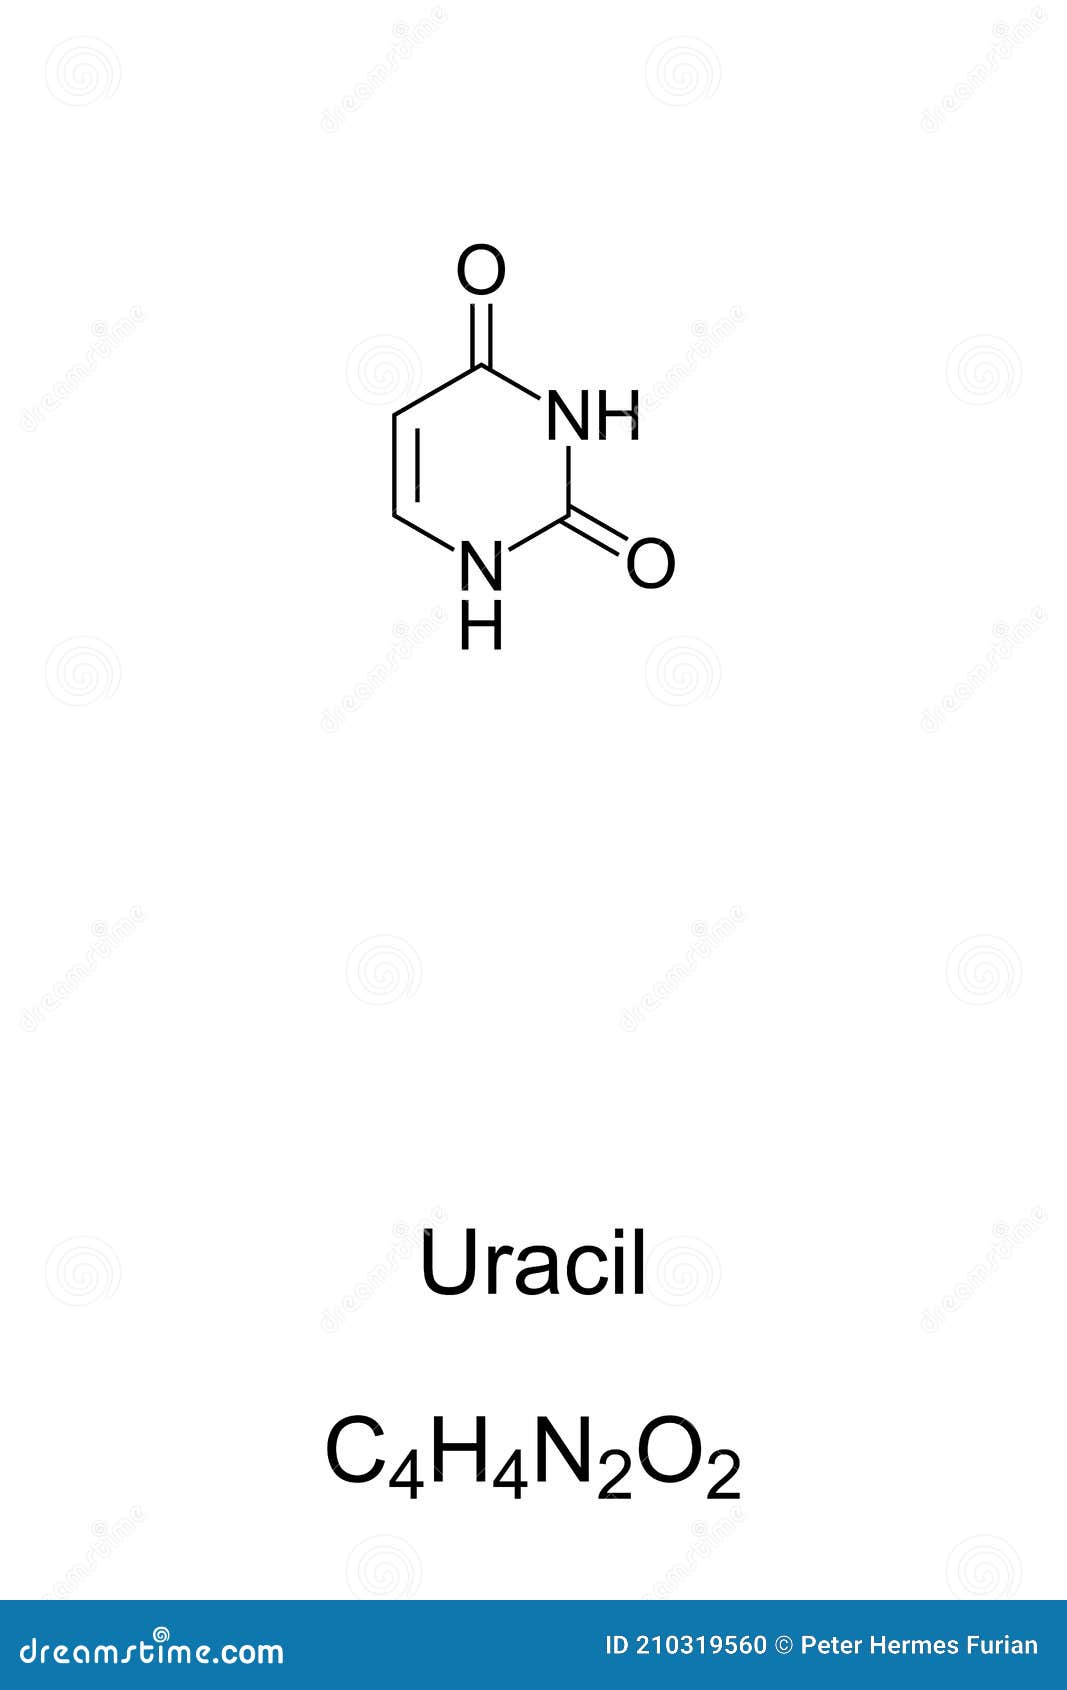 uracil, u, nucleobase in rna, chemical formula and skeletal structure